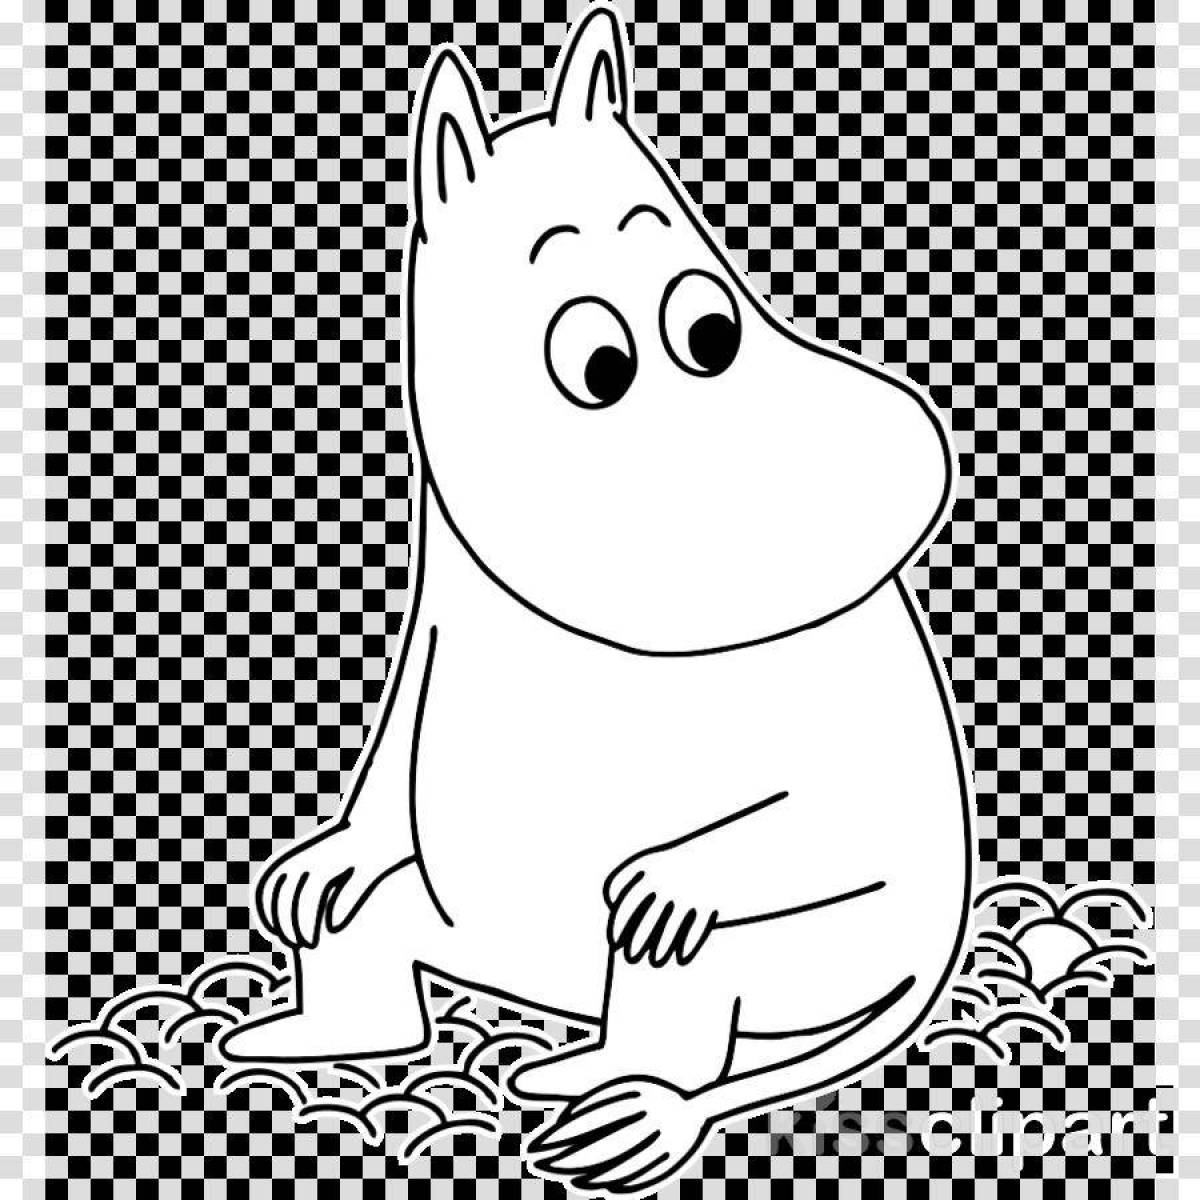 Moomin trolls #4